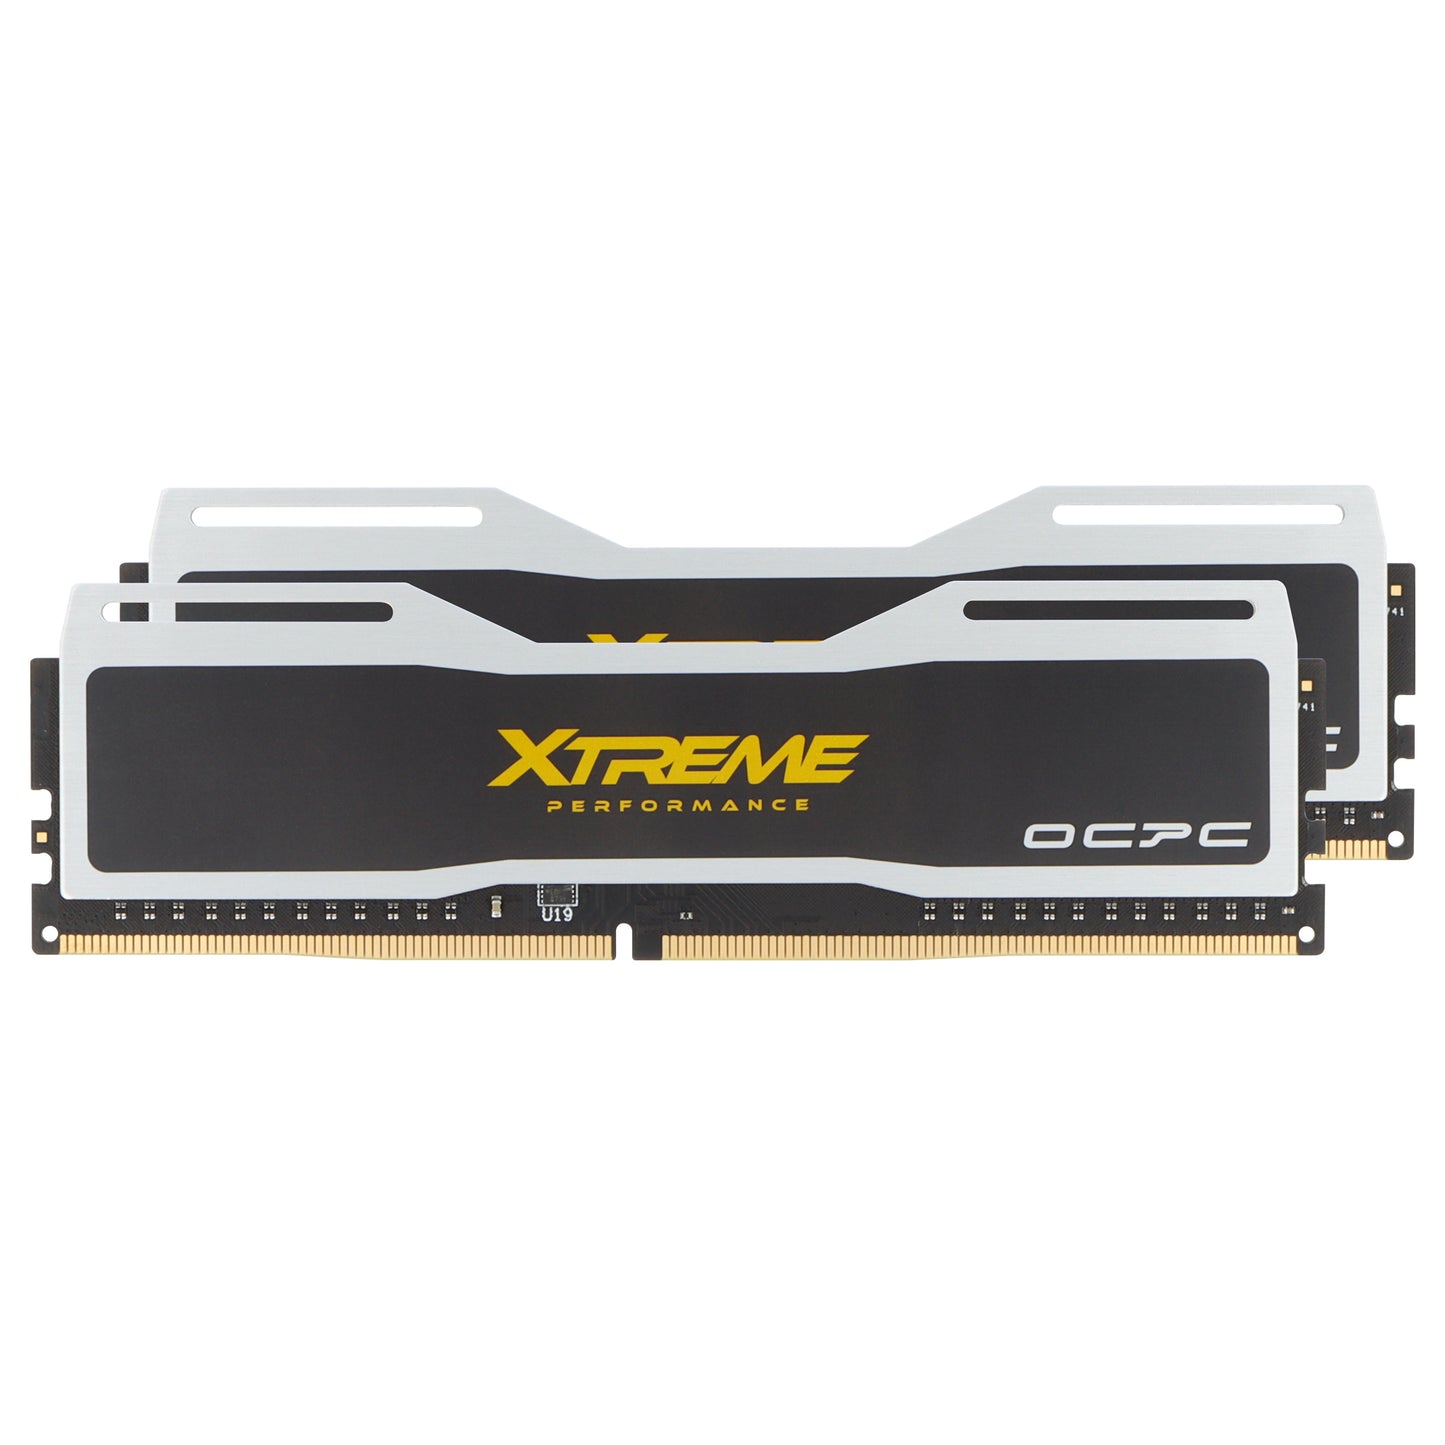 OCPC Xtreme DDR4 16GB (2x8GB) - 3000MHz - CL16 - DIMM - Desktop